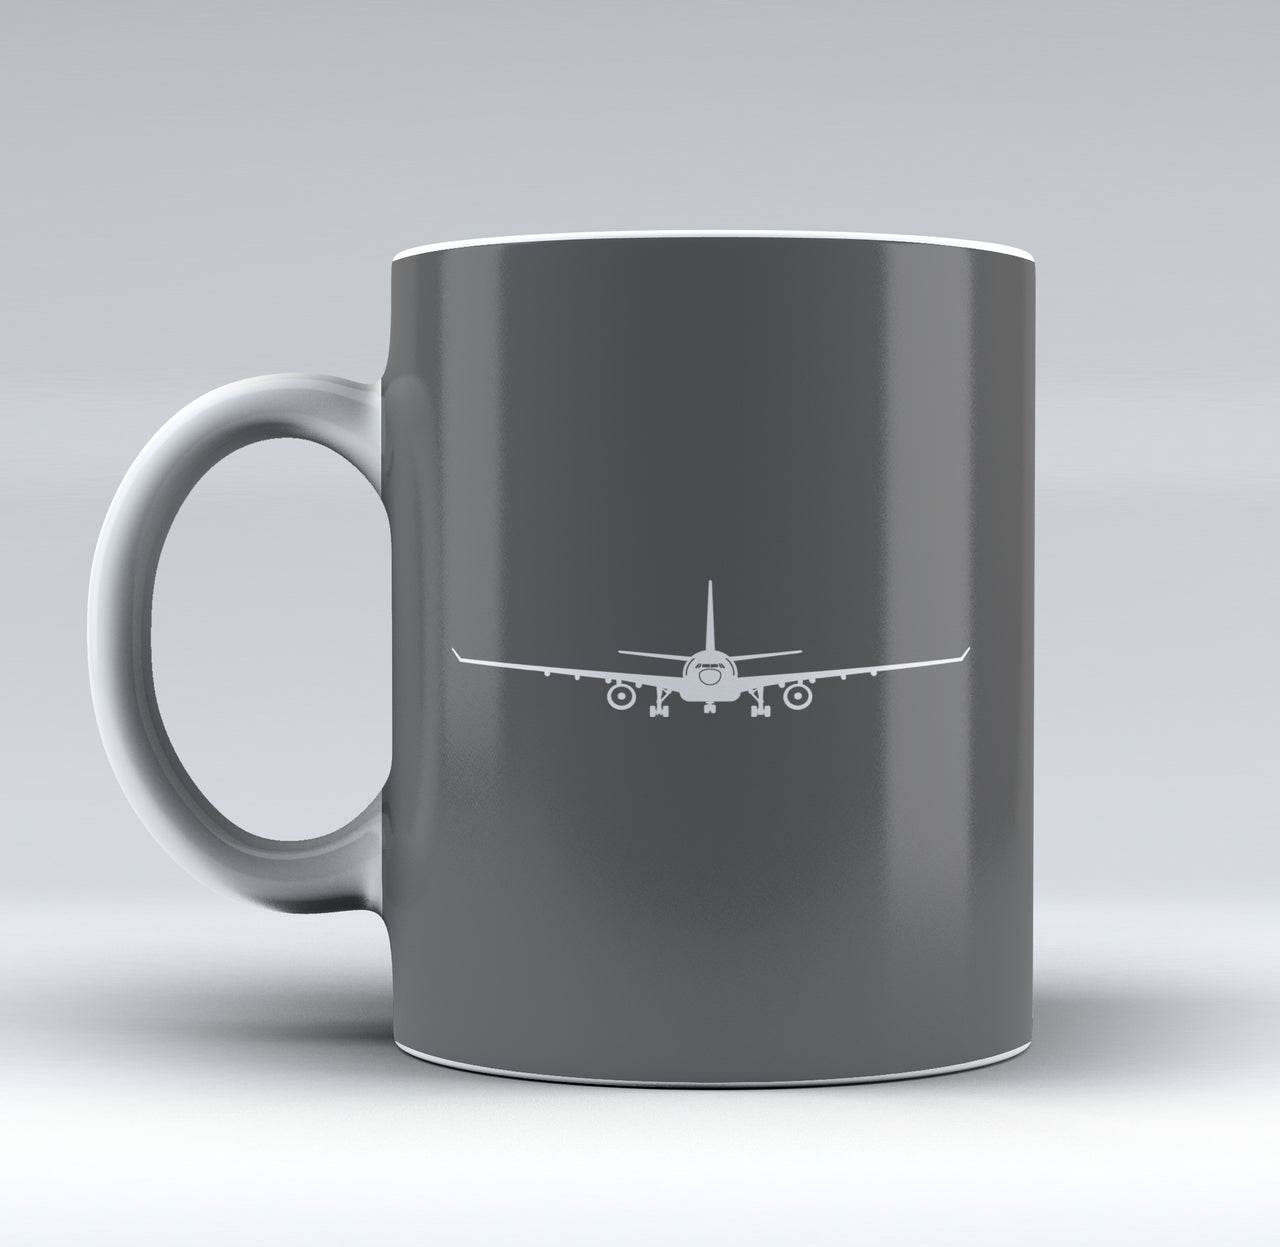 Airbus A330 Silhouette Designed Mugs